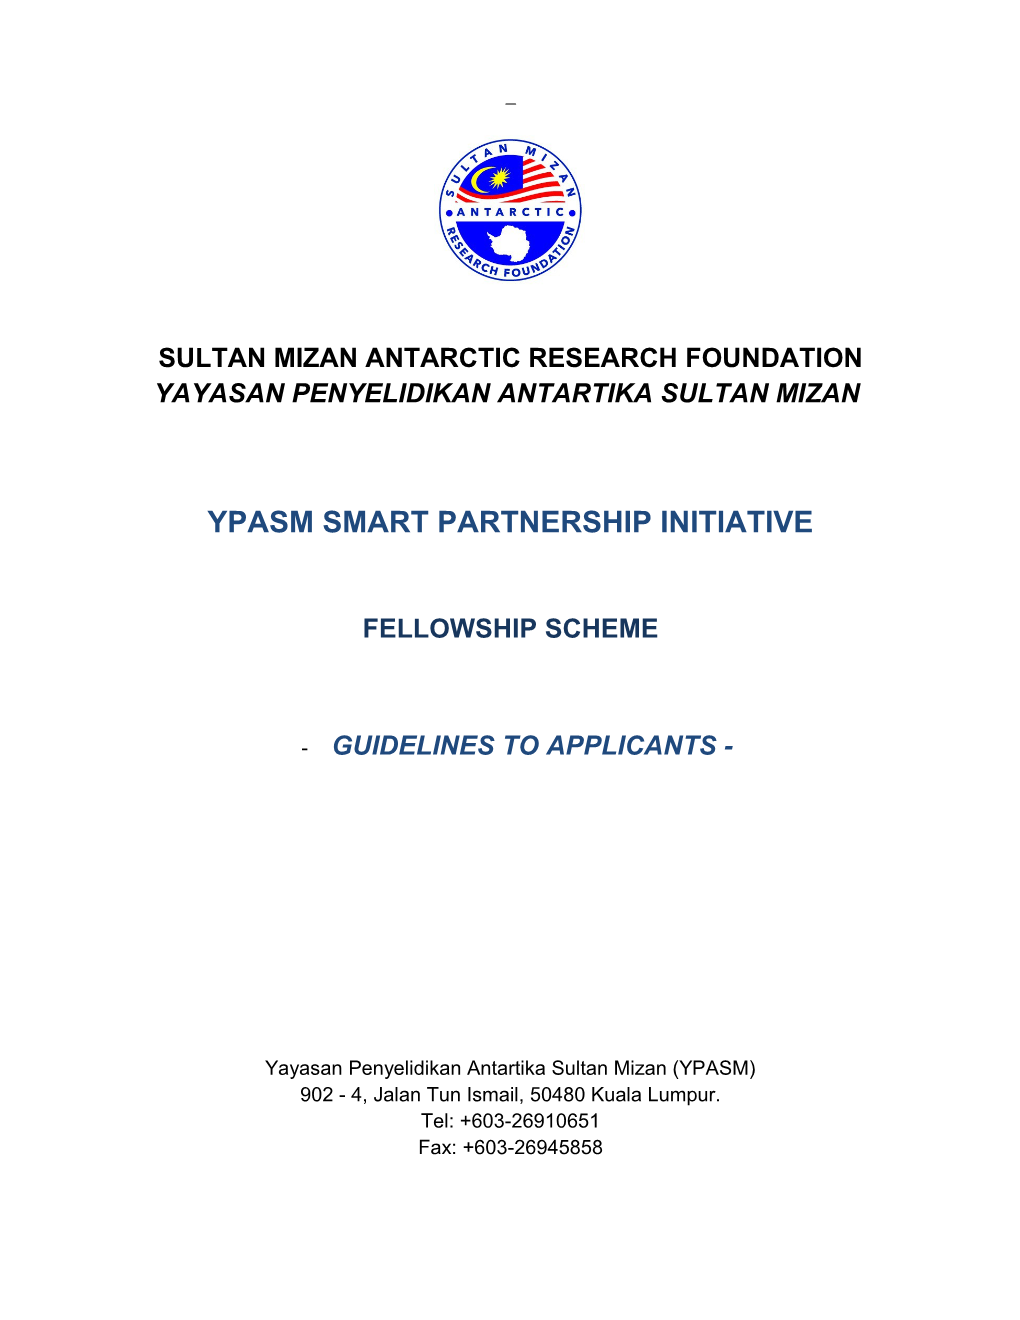 Sultan Mizan Antarctic Research Foundation